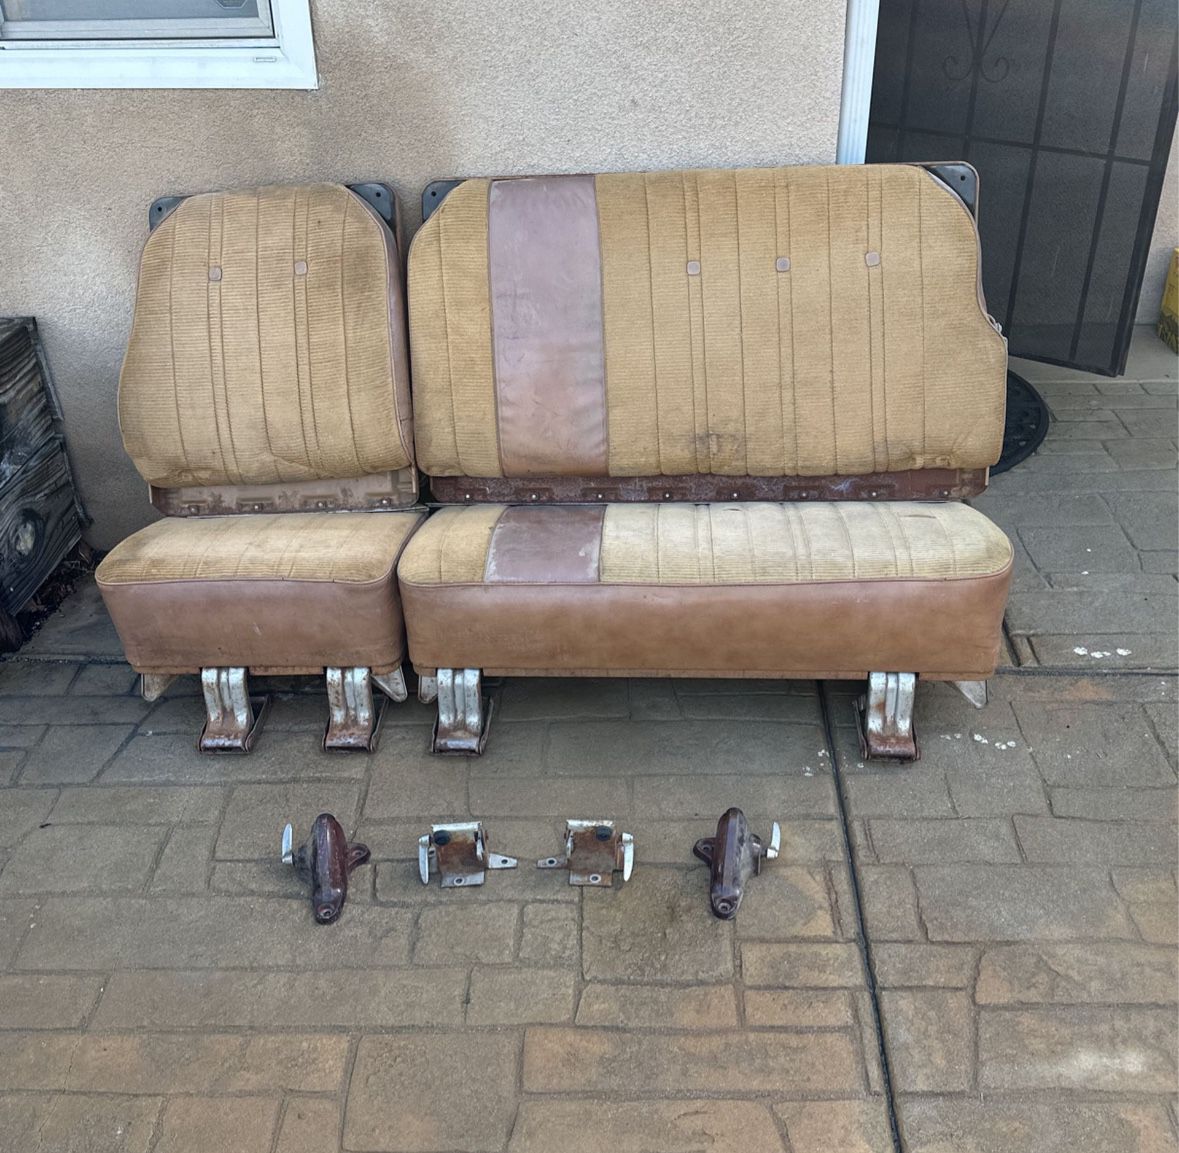 Chevy GMC Squarebody Rear Seat Set 